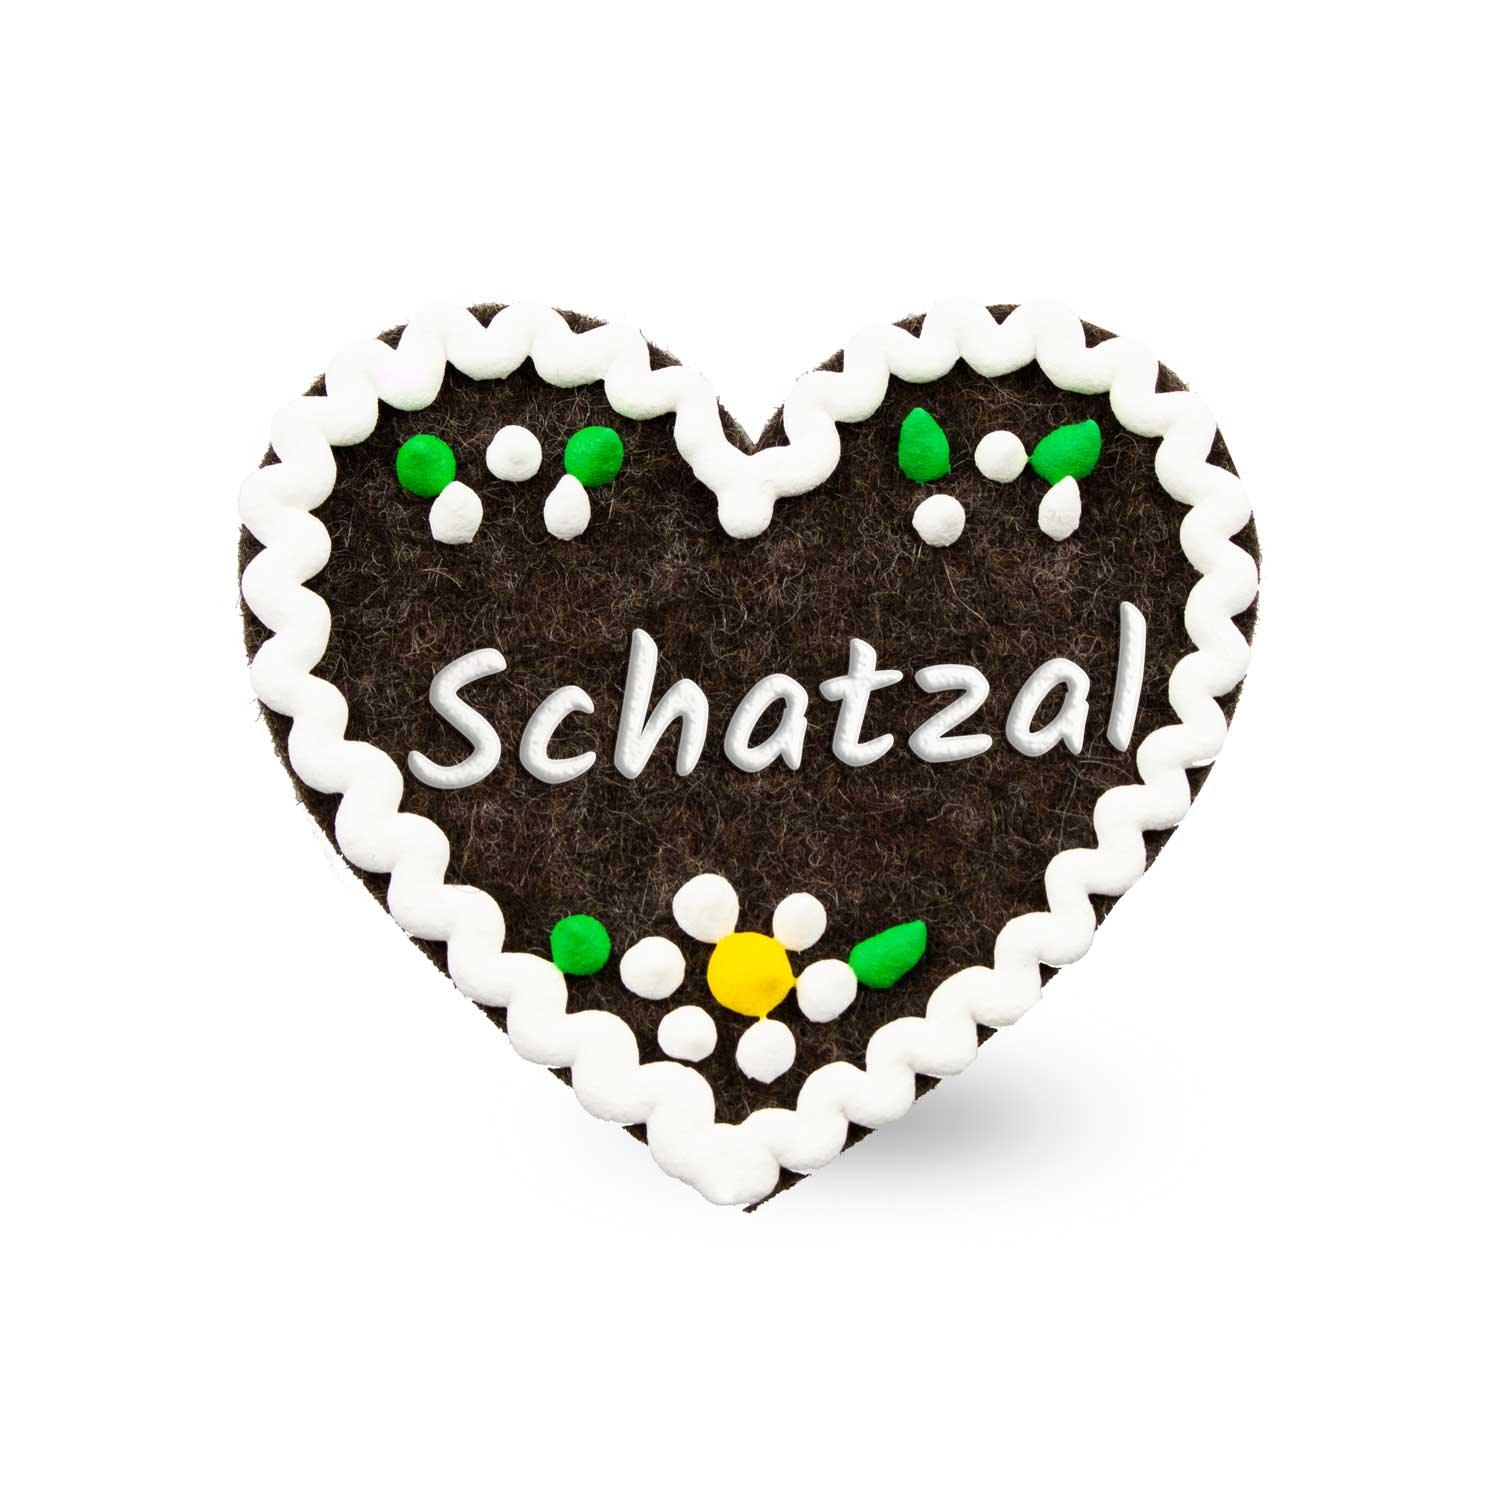 Filzherz-Anstecker "Schatzal" - bavariashop - mei LebensGfui